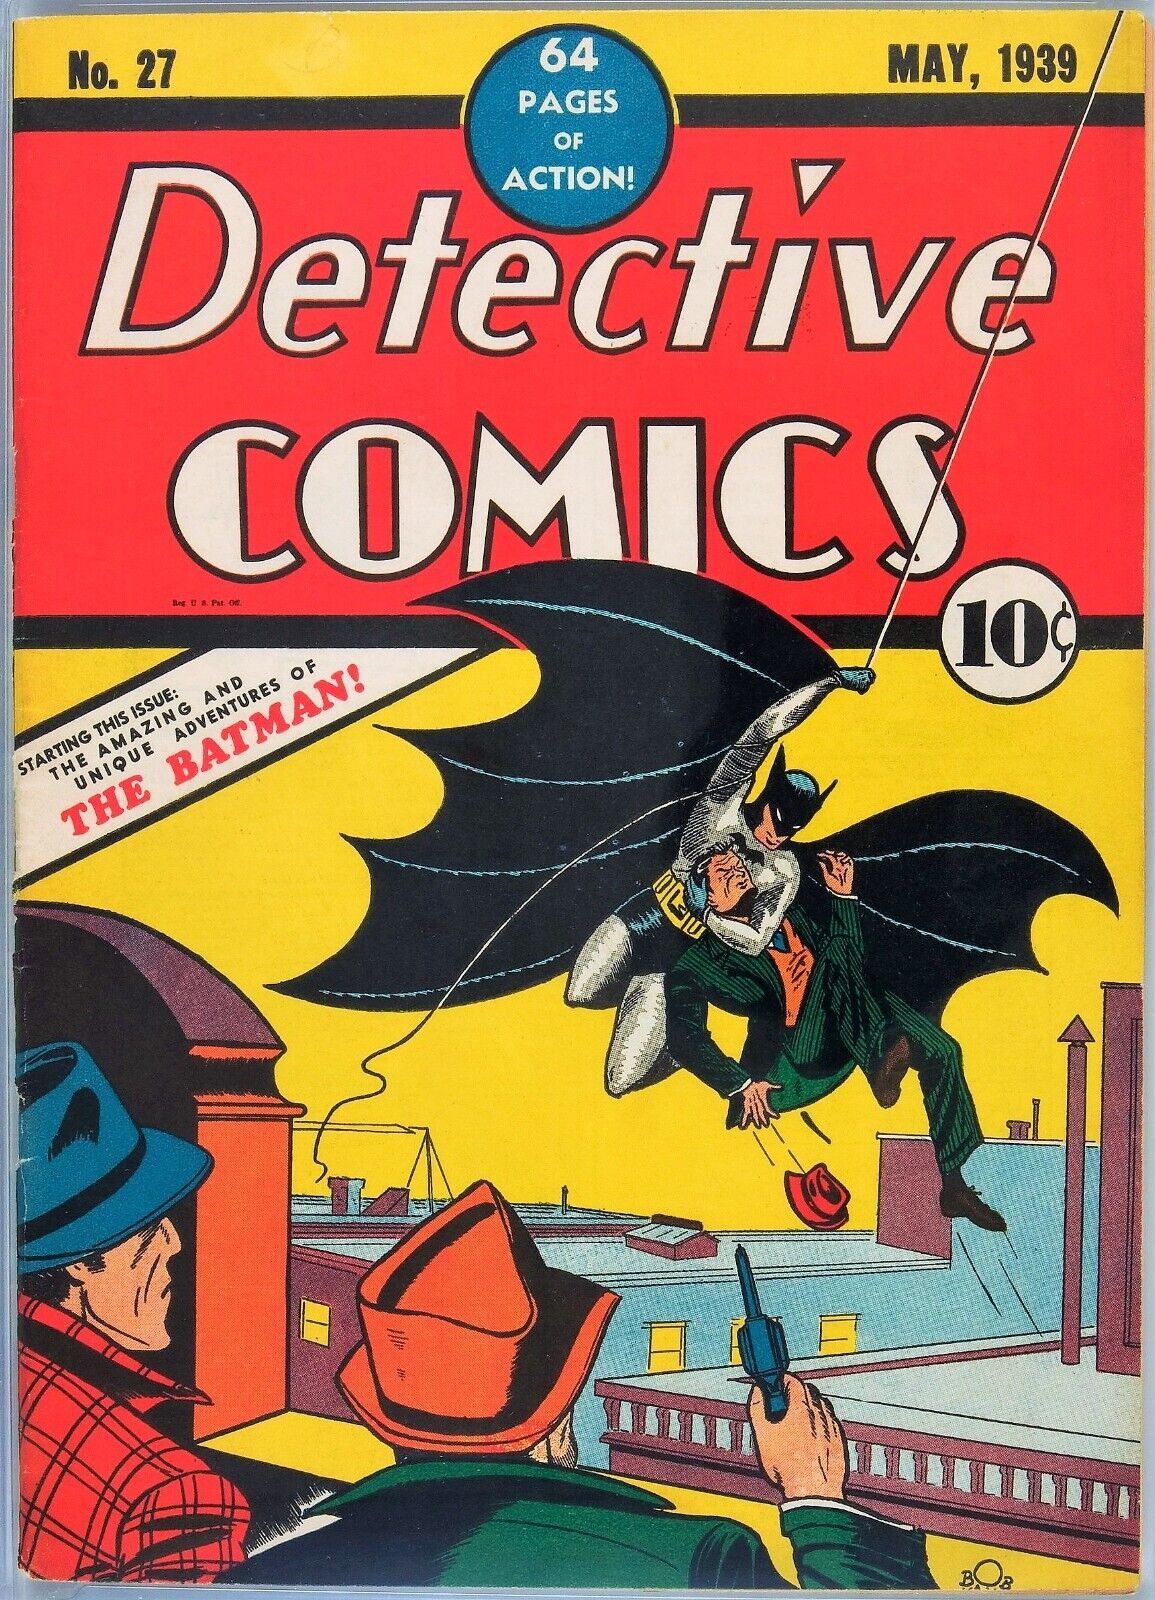 DETECTIVE COMICS Collection On Three (3)Discs Vintage BATMAN CLASSICS Awesome